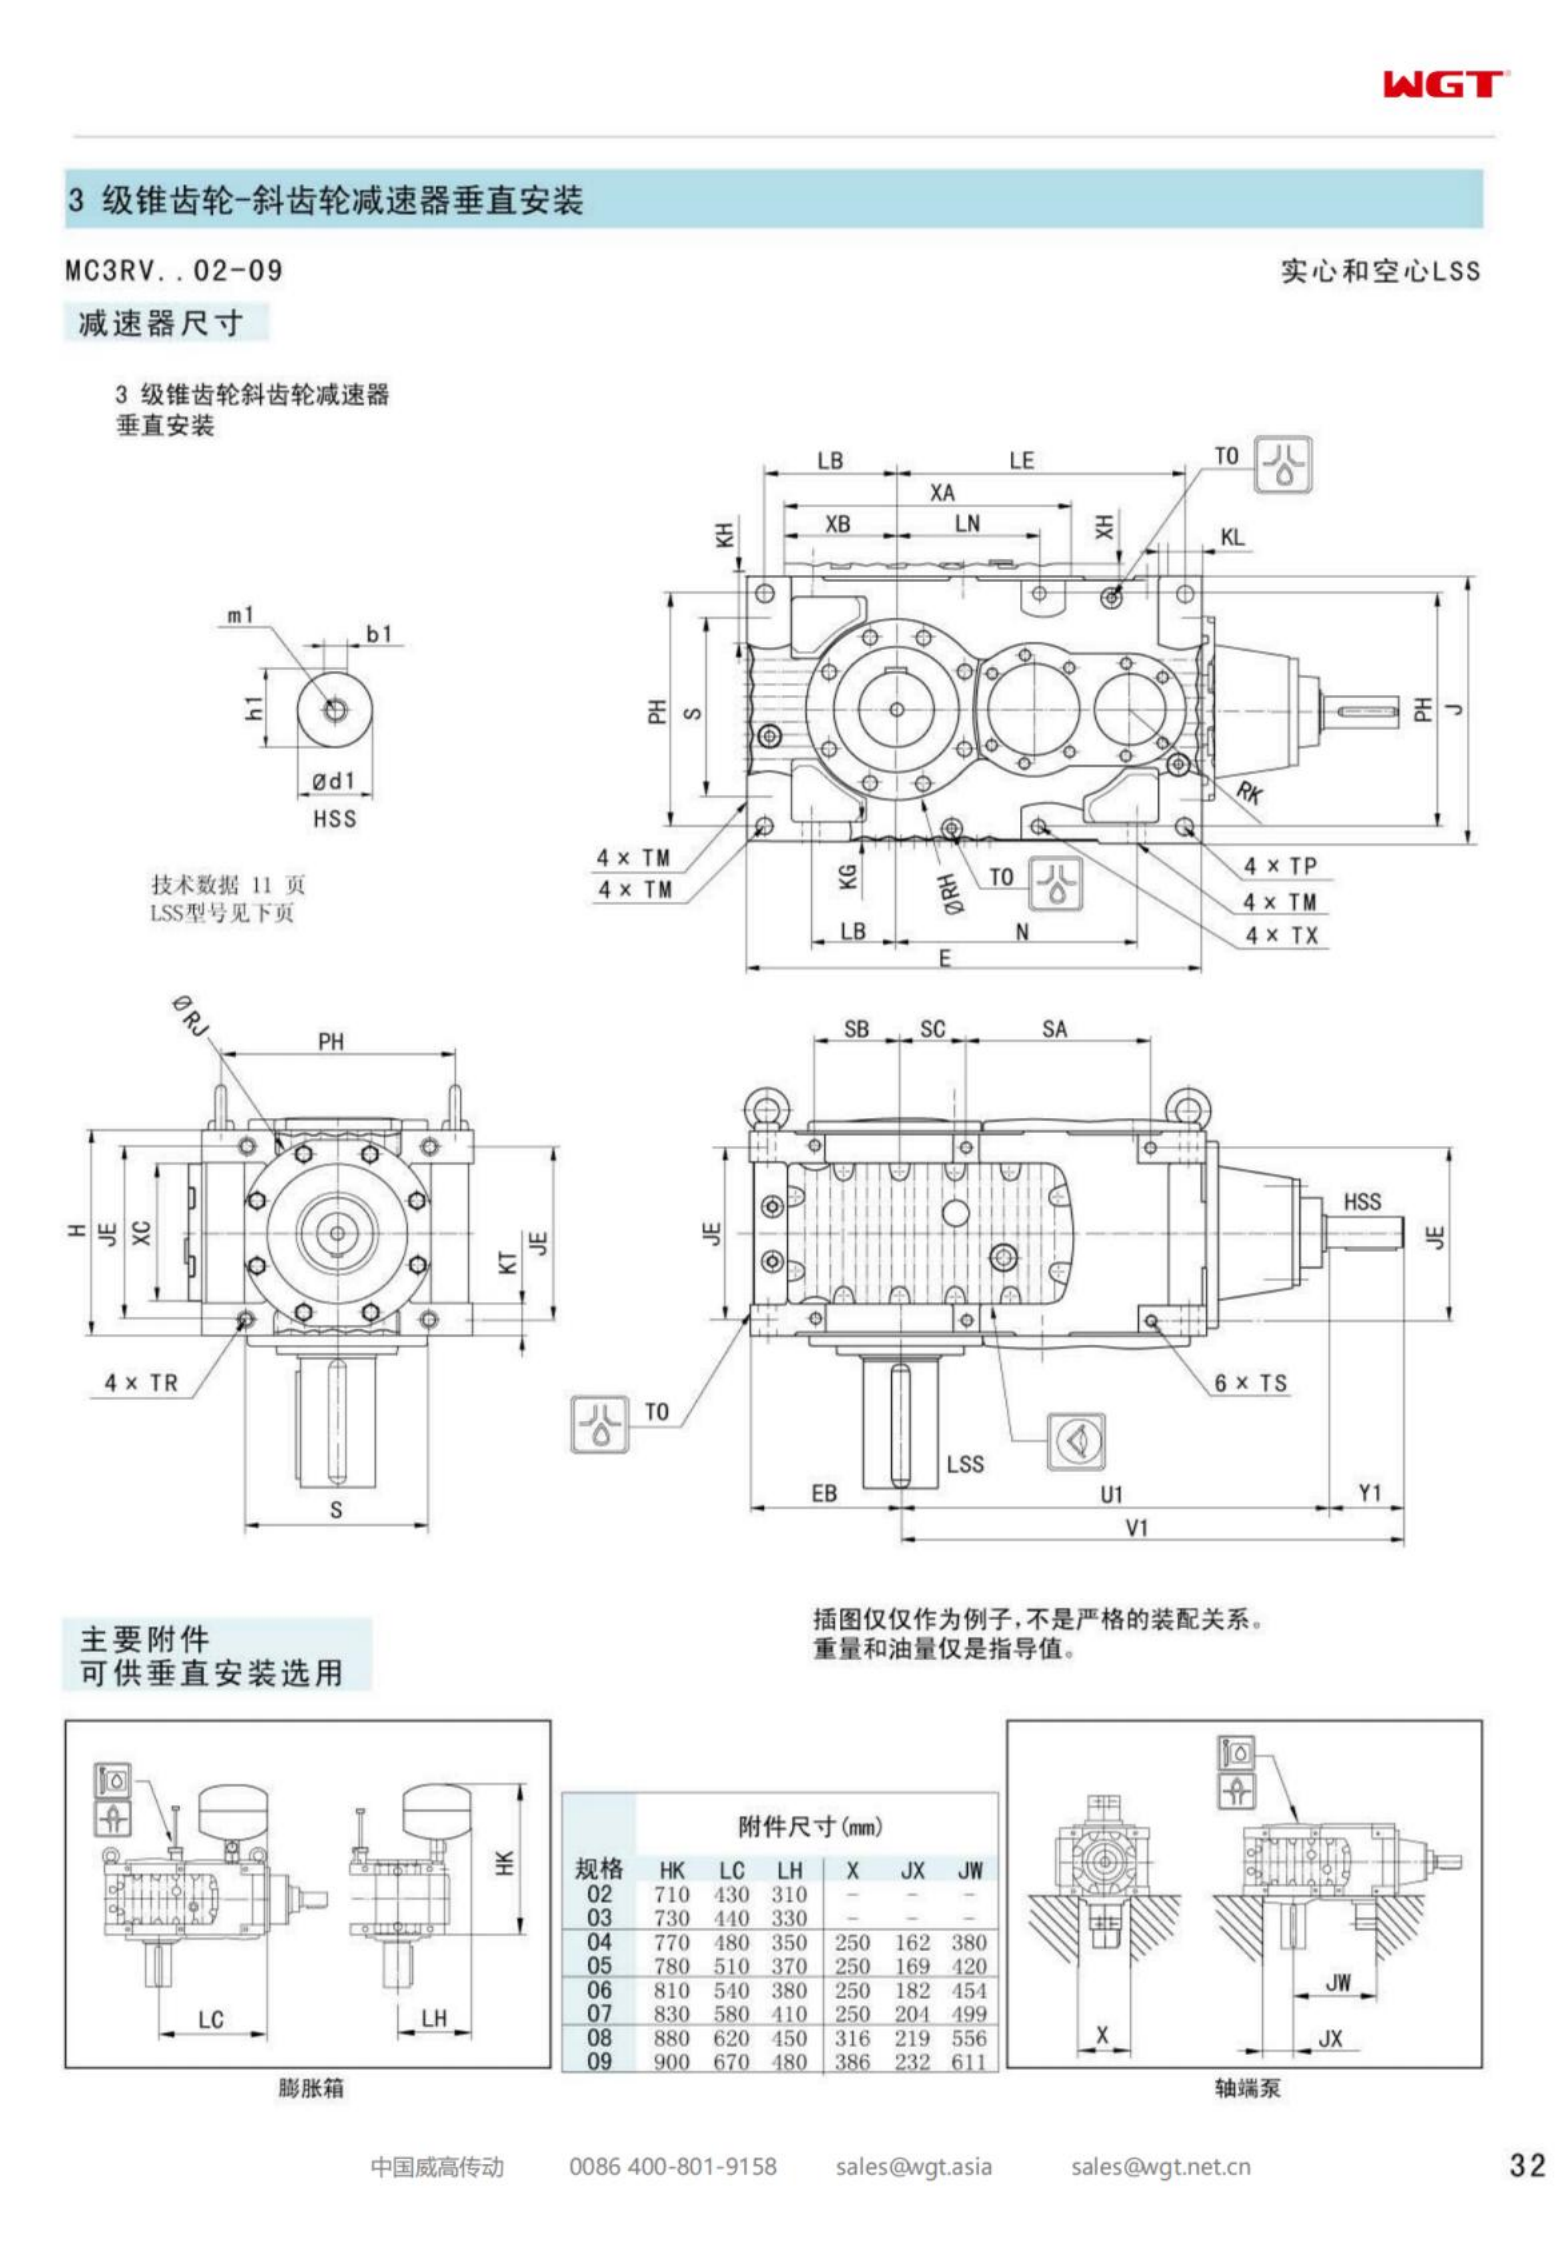 MC3RVST04 replaces _SEW_MC_Series gearbox (patent)